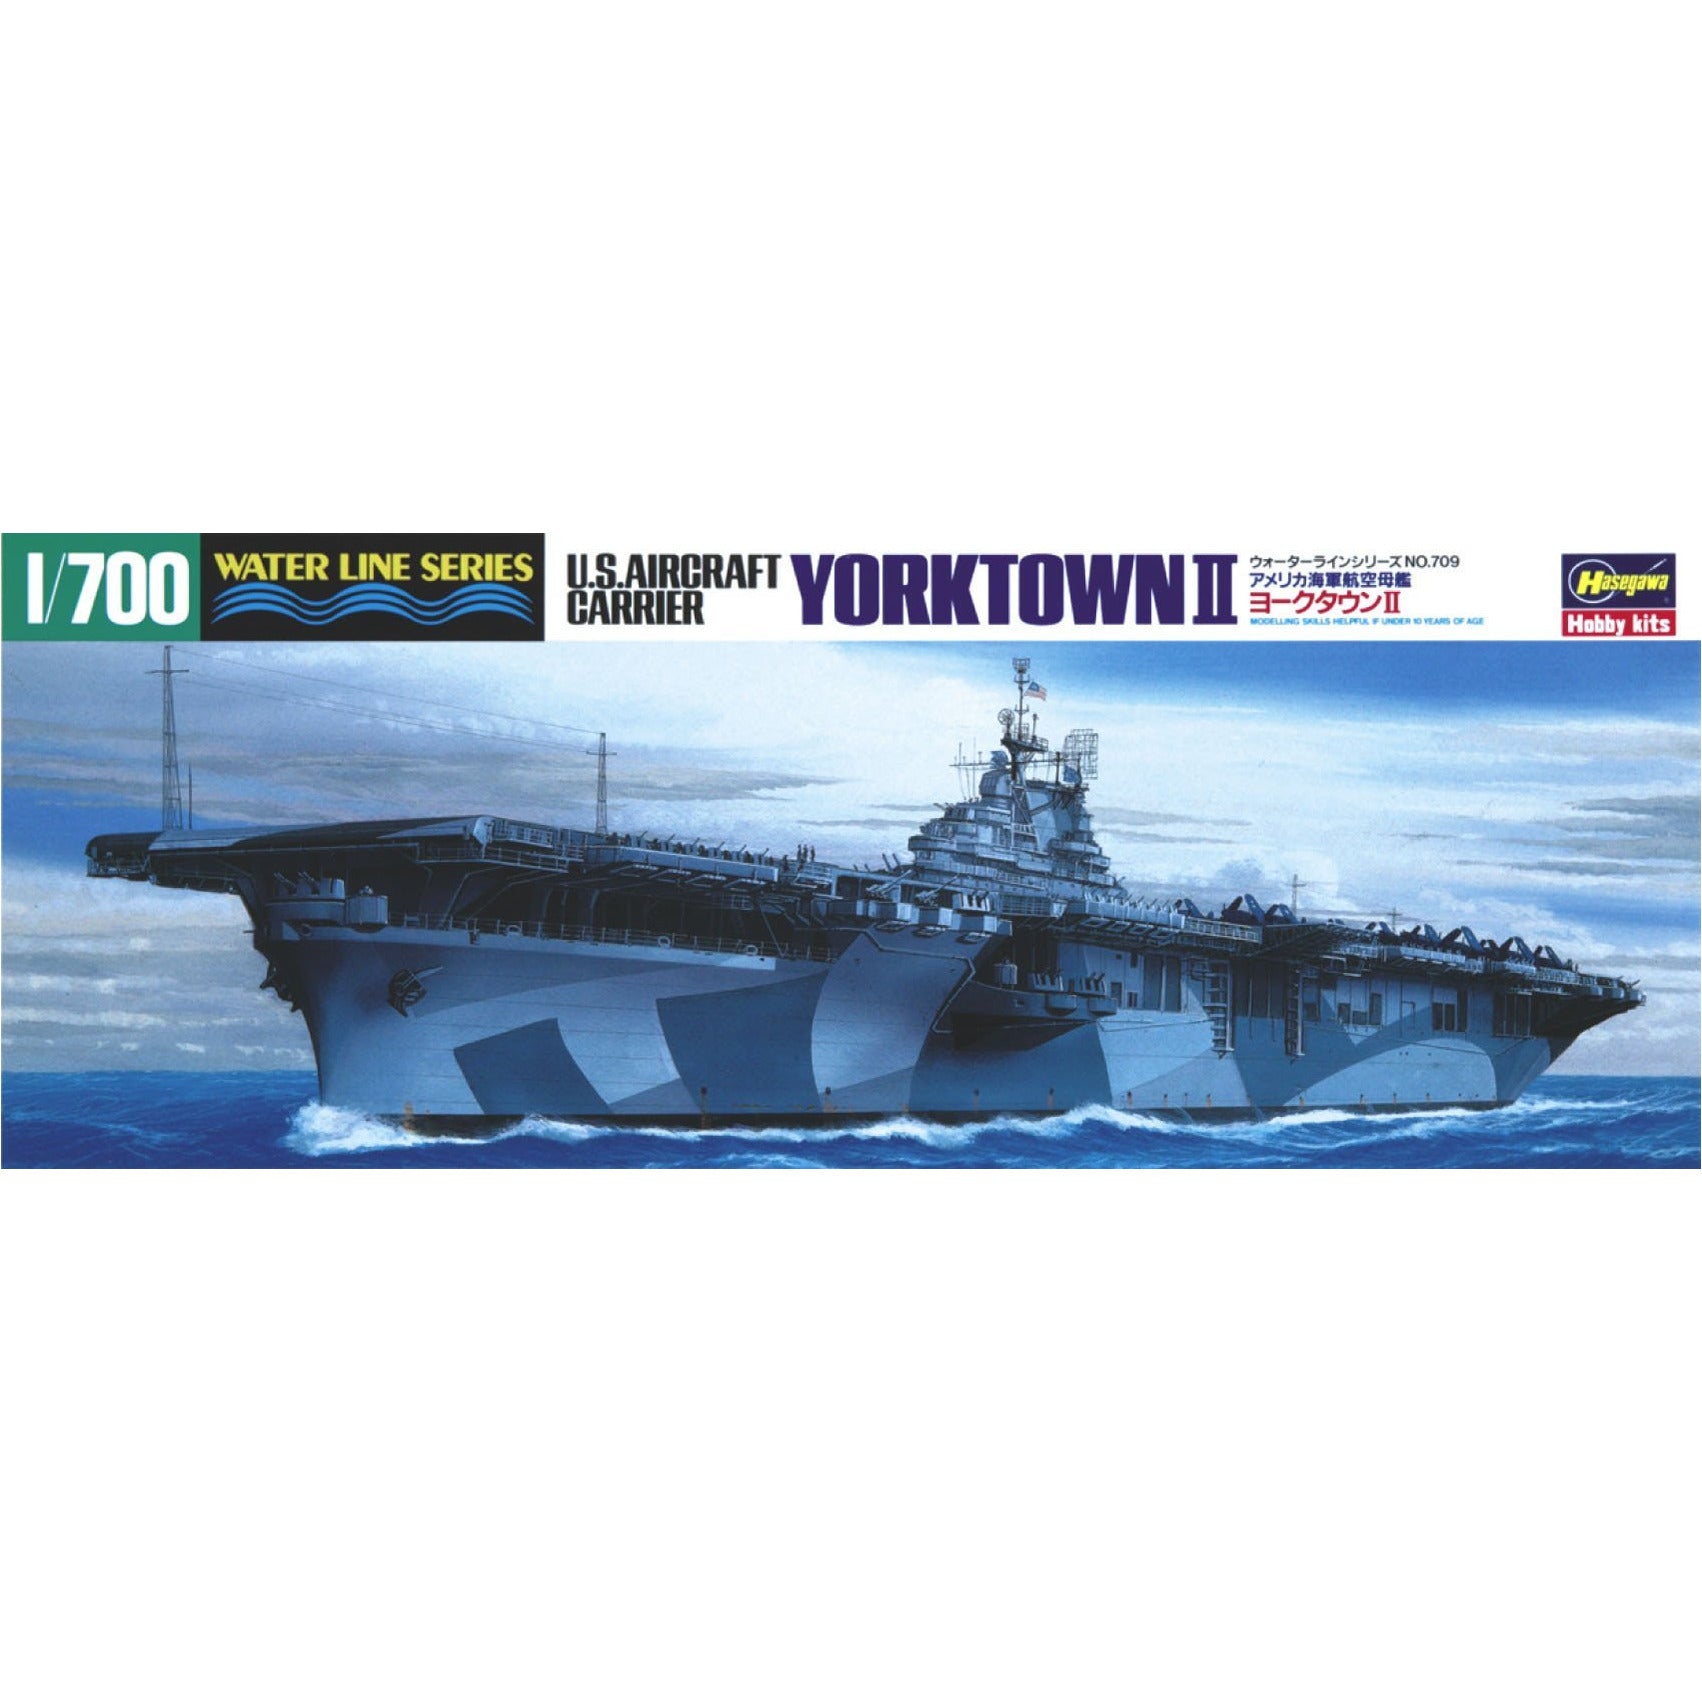 USN Aircraft Carrier Yorktown II 1/700 Model Ship Kit #49709 by Hasegawa